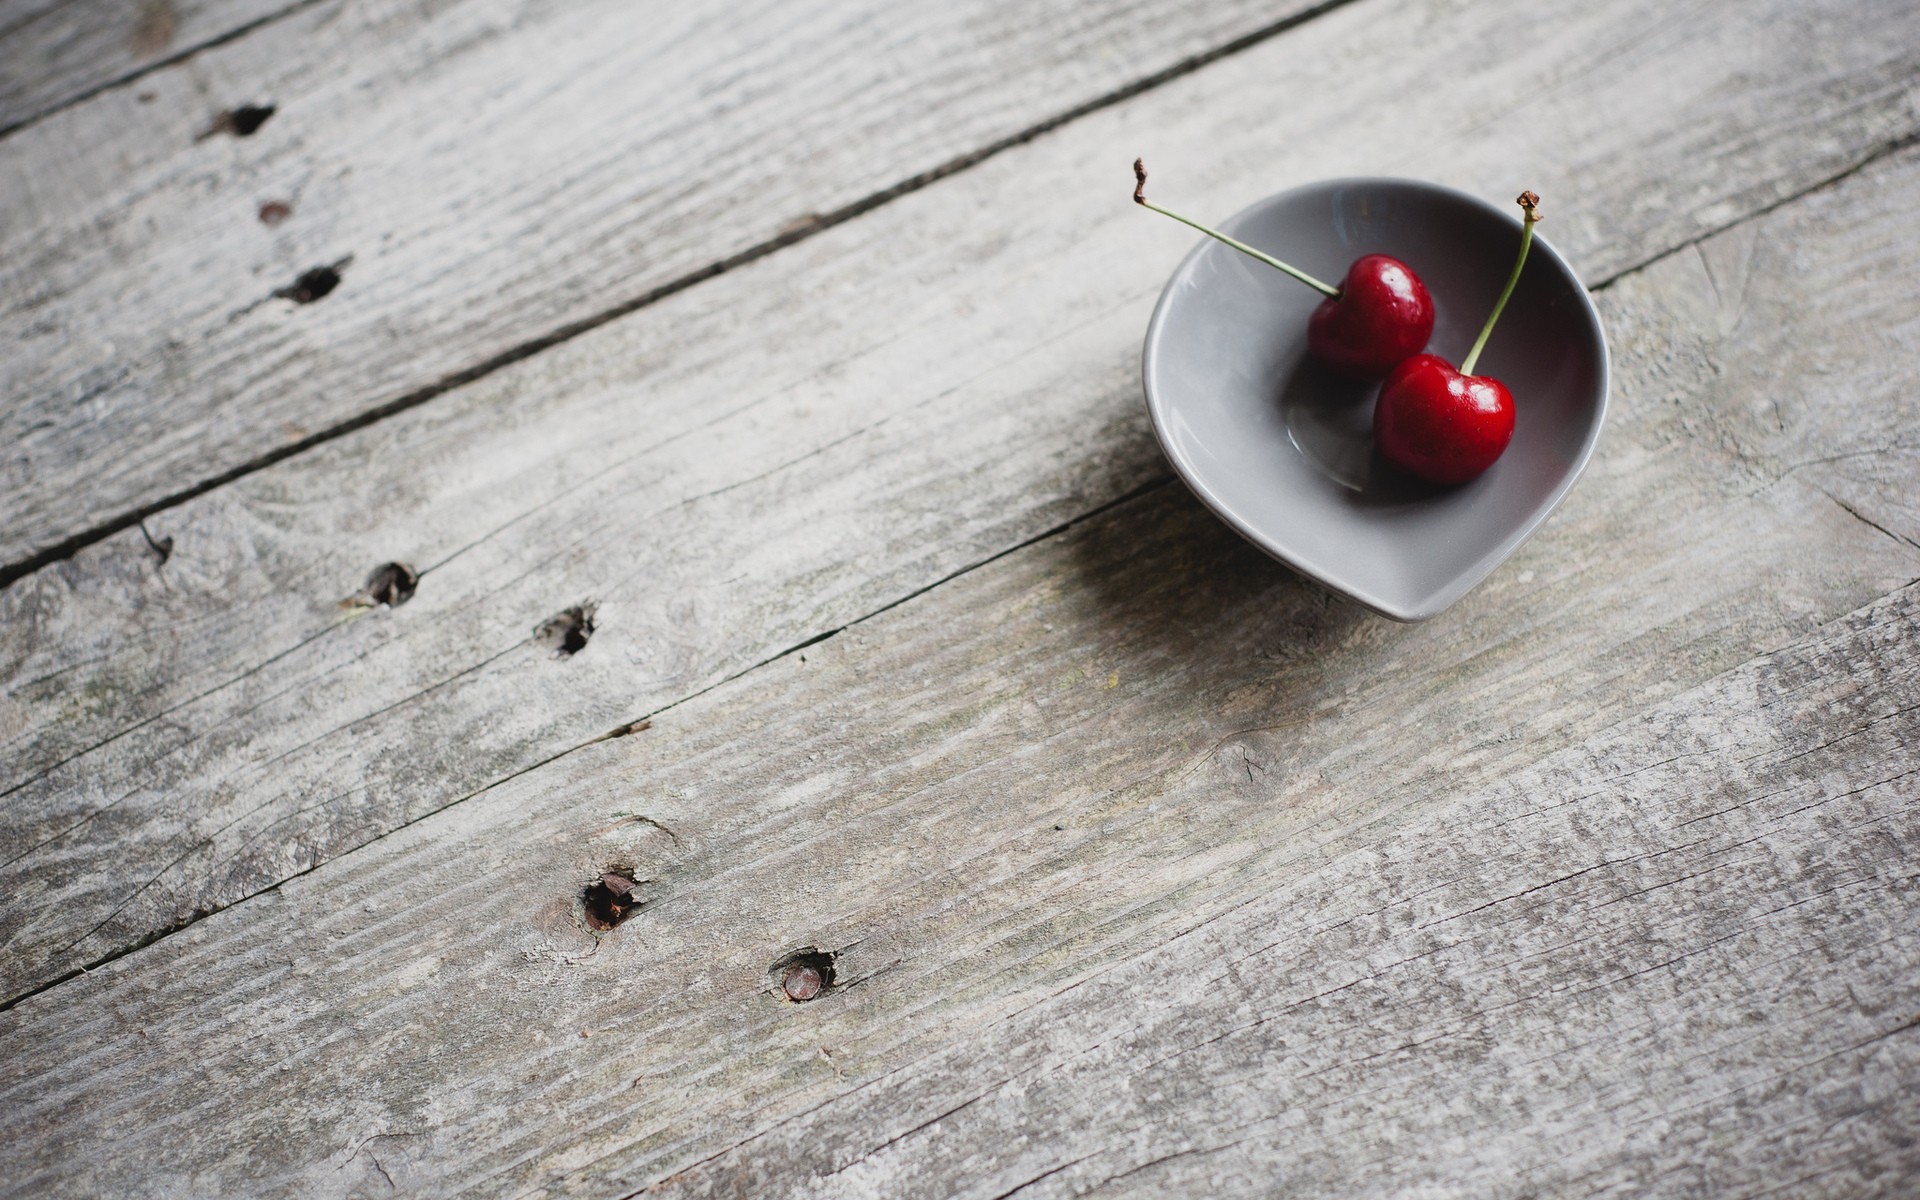 General 1920x1200 bowls fruit wooden surface cherries food berries closeup